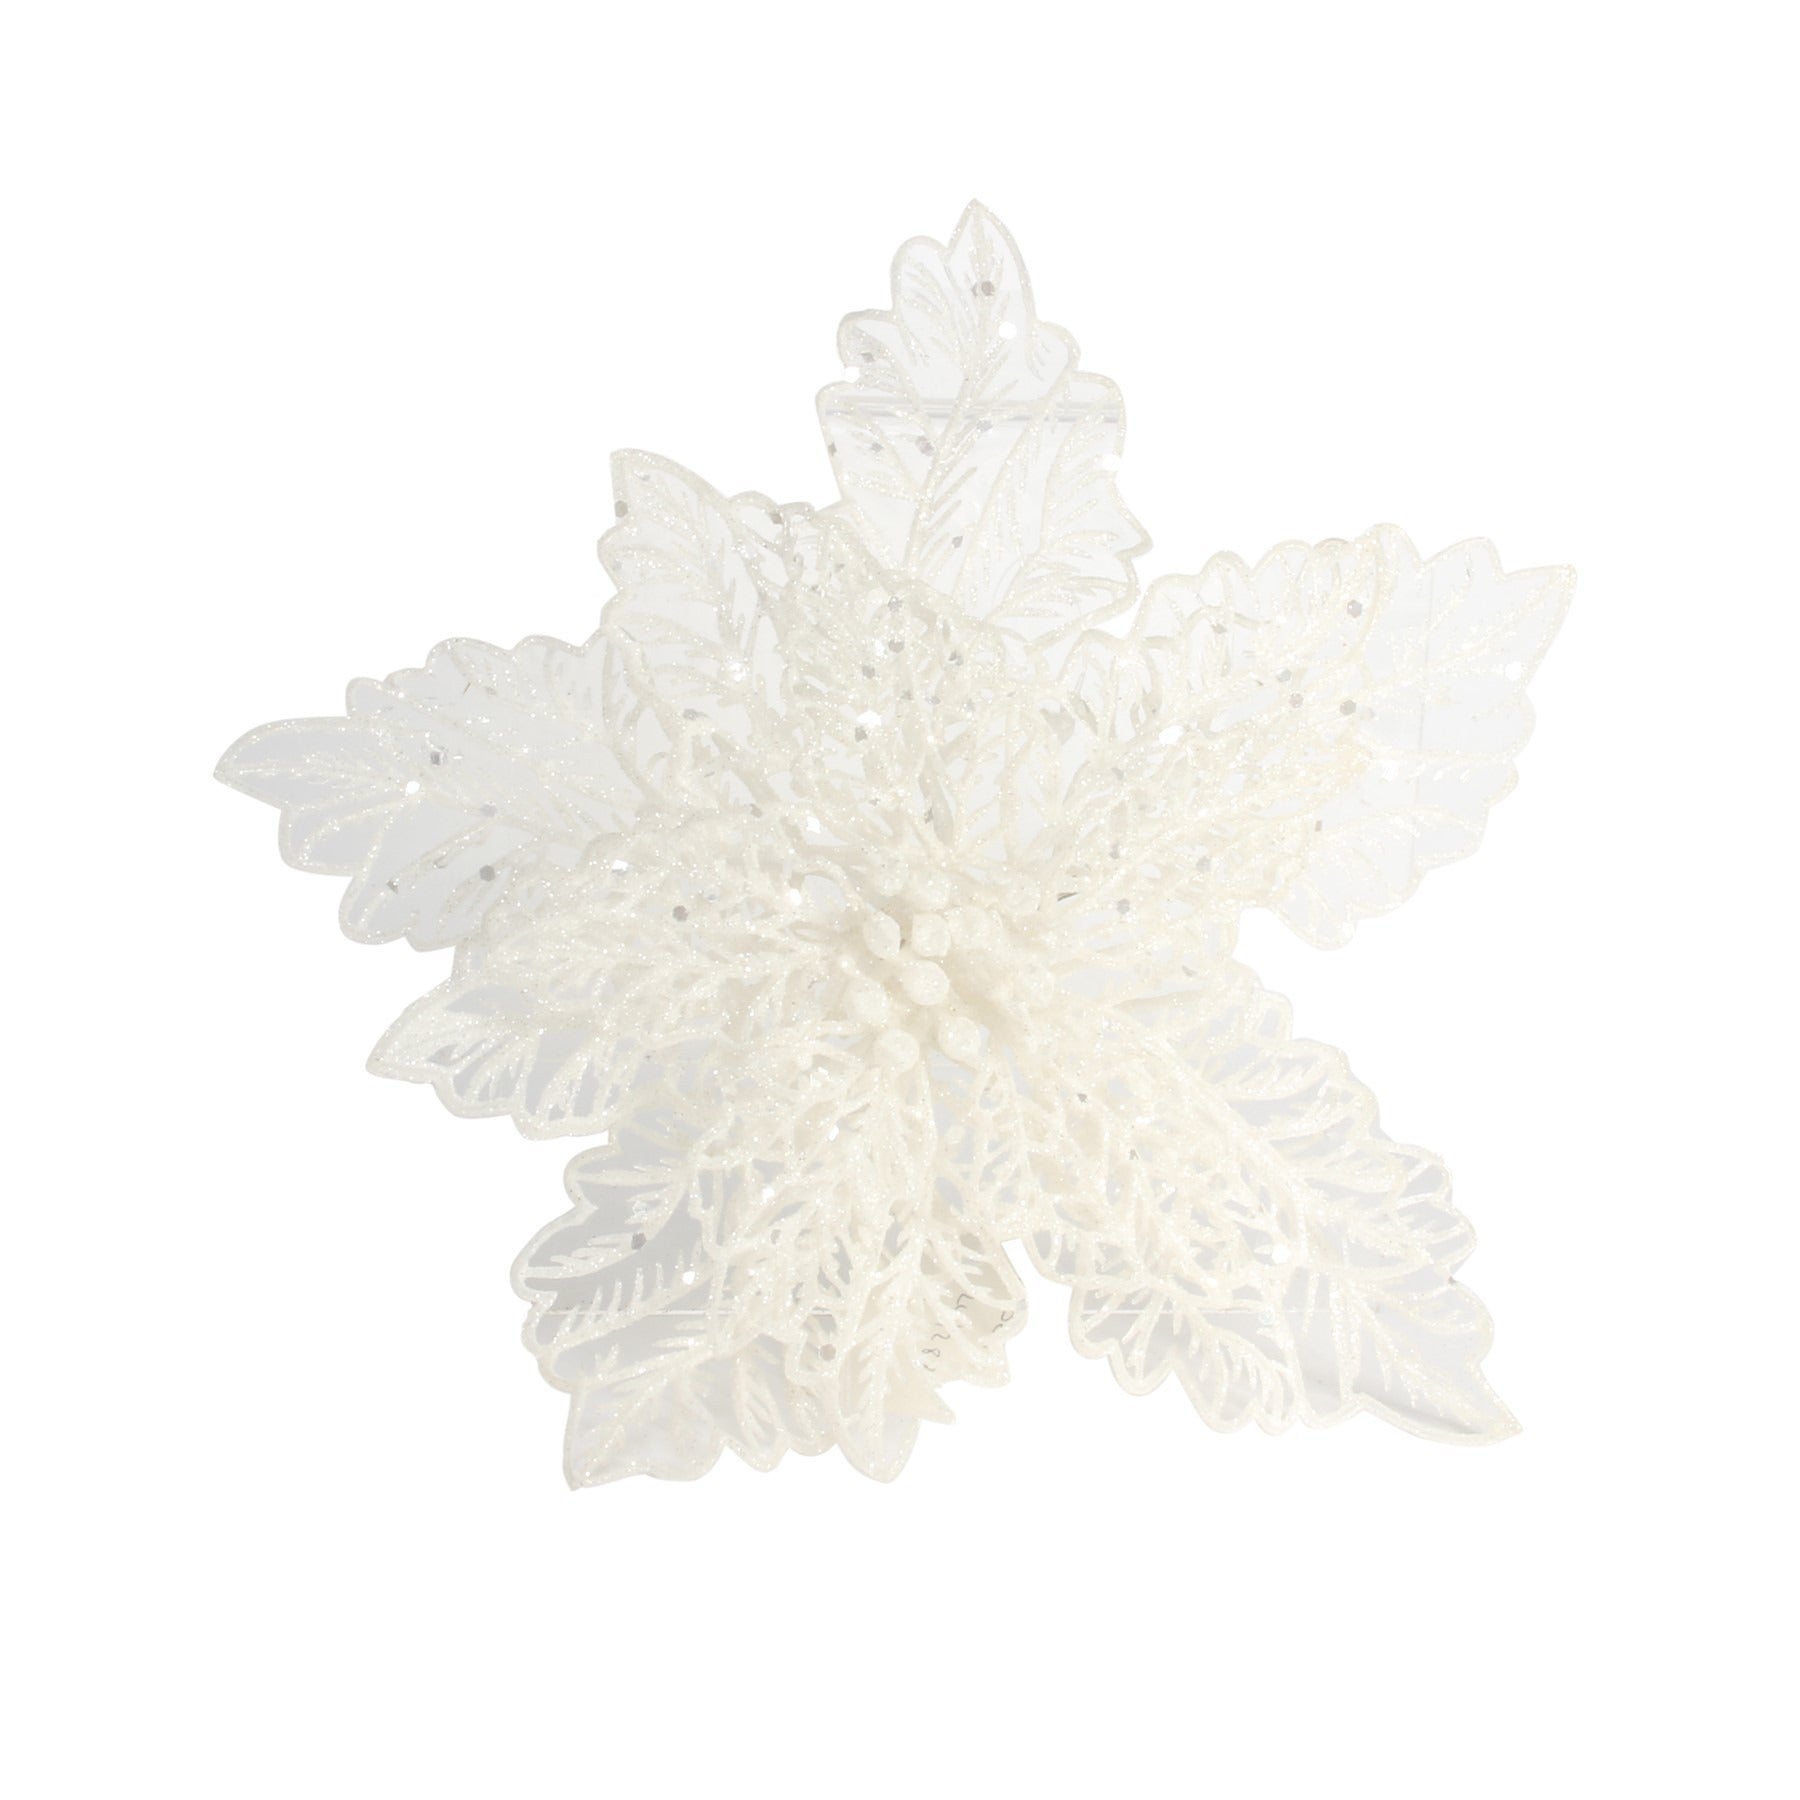 View White Poinsettia Filagree with Clip Dia22cm information